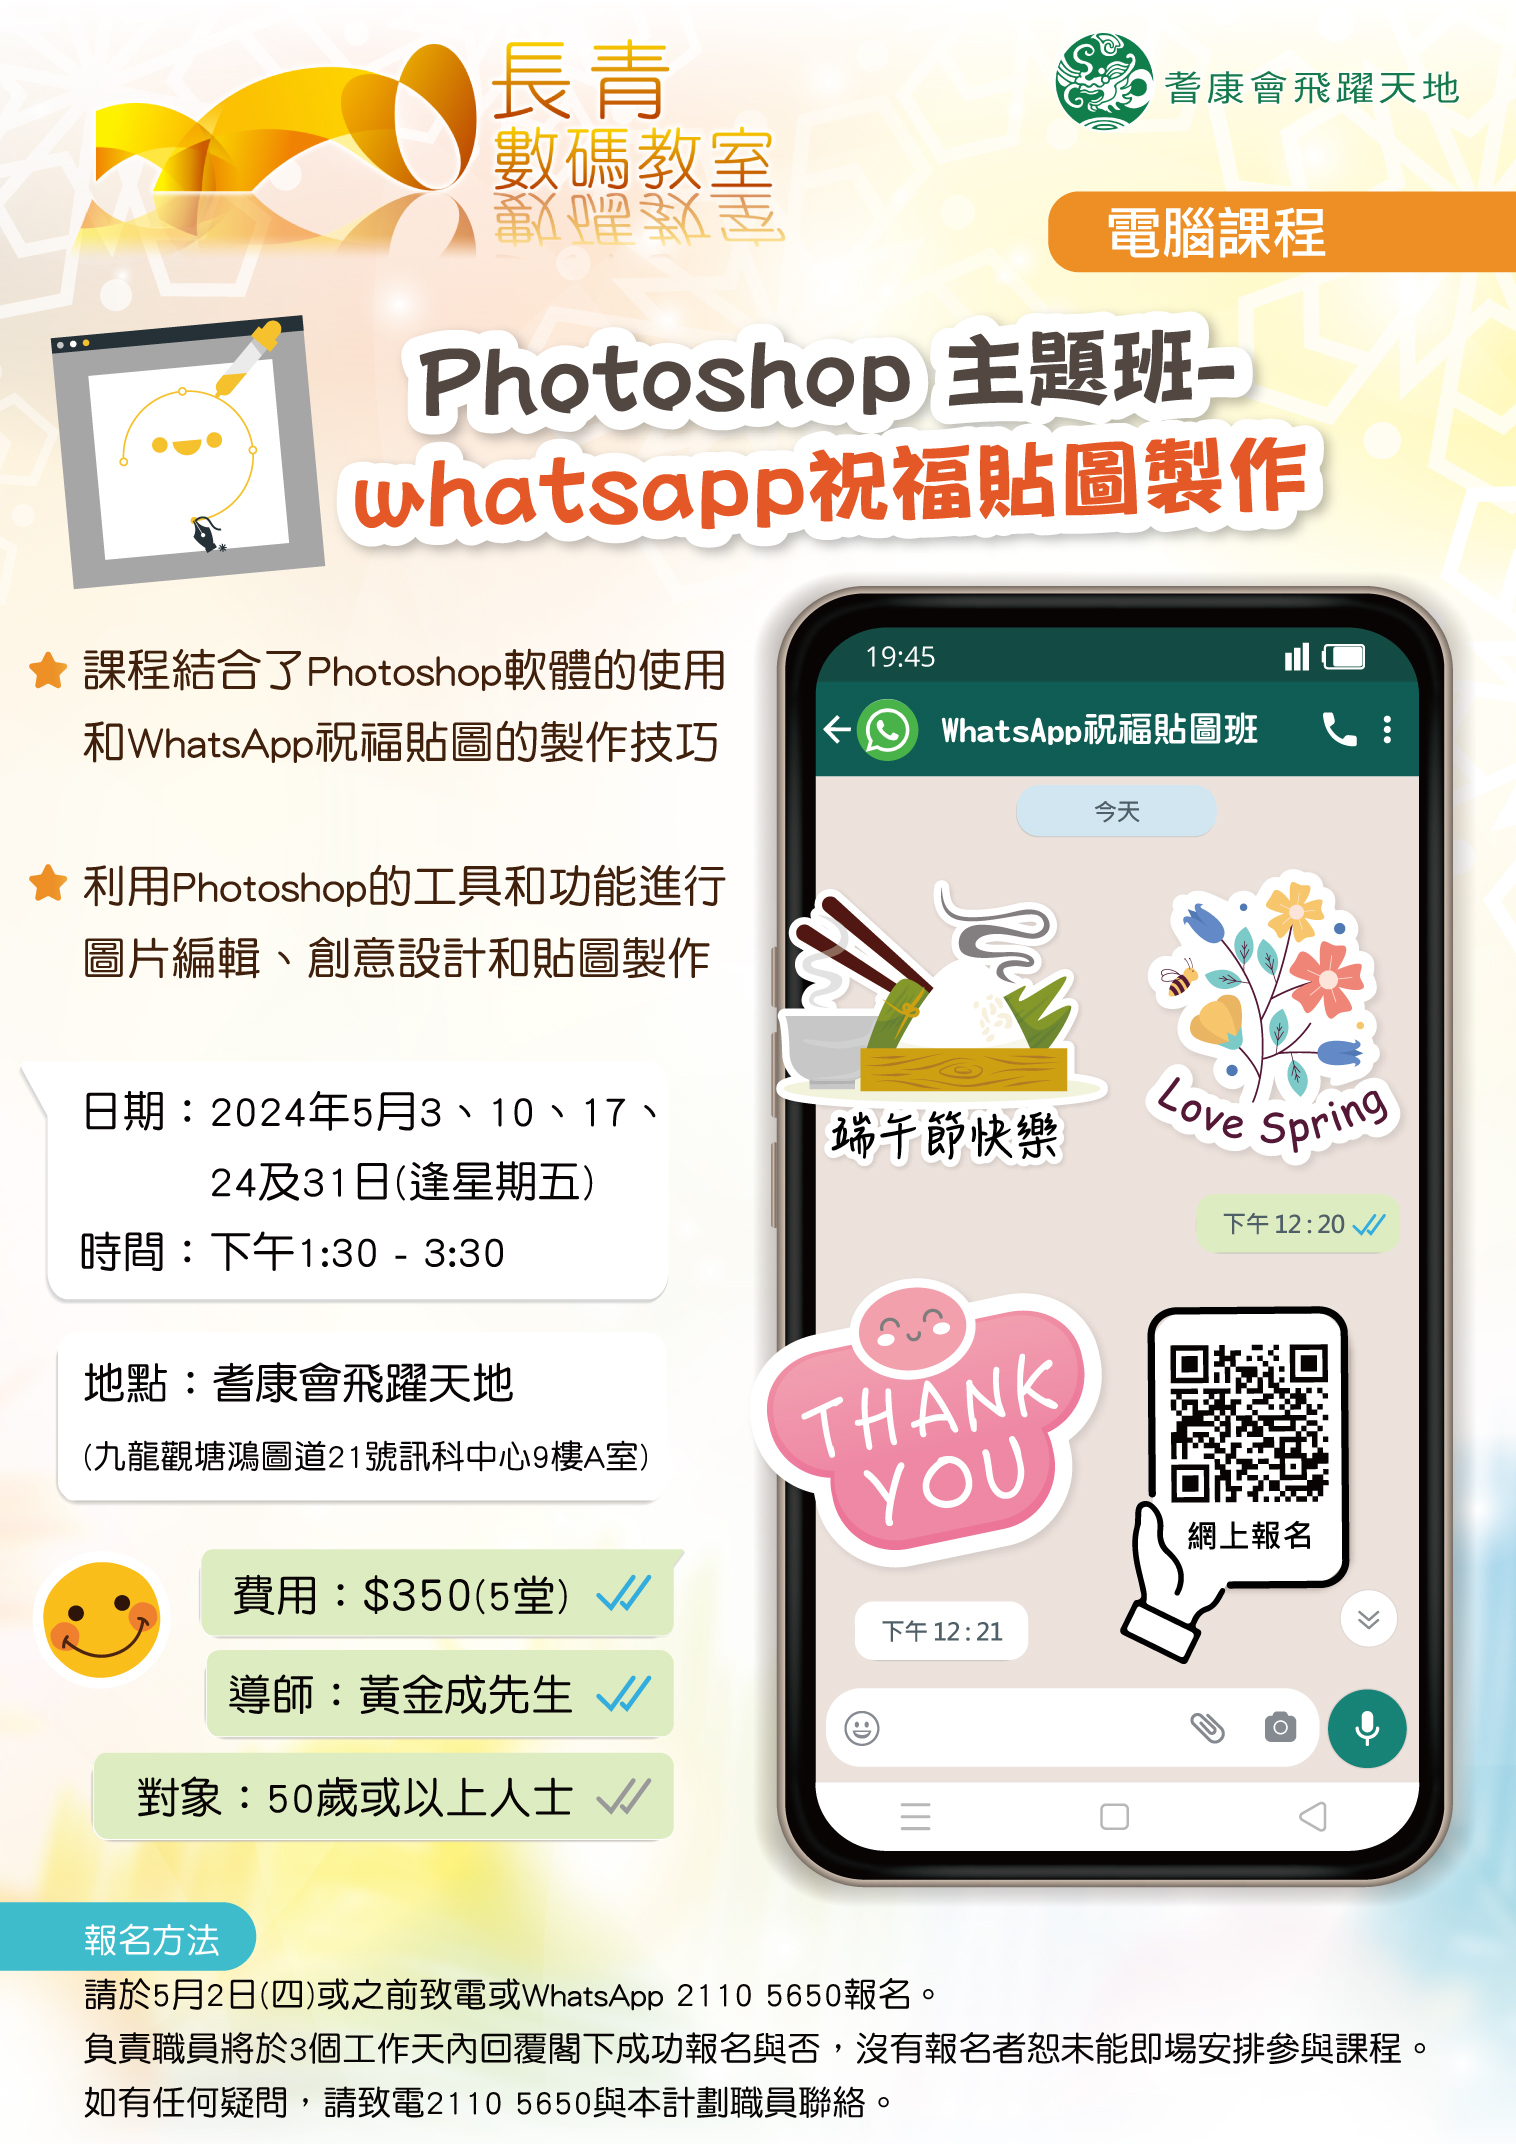 PhotoShop 主題班 – WhatsApp 祝福貼圖製作